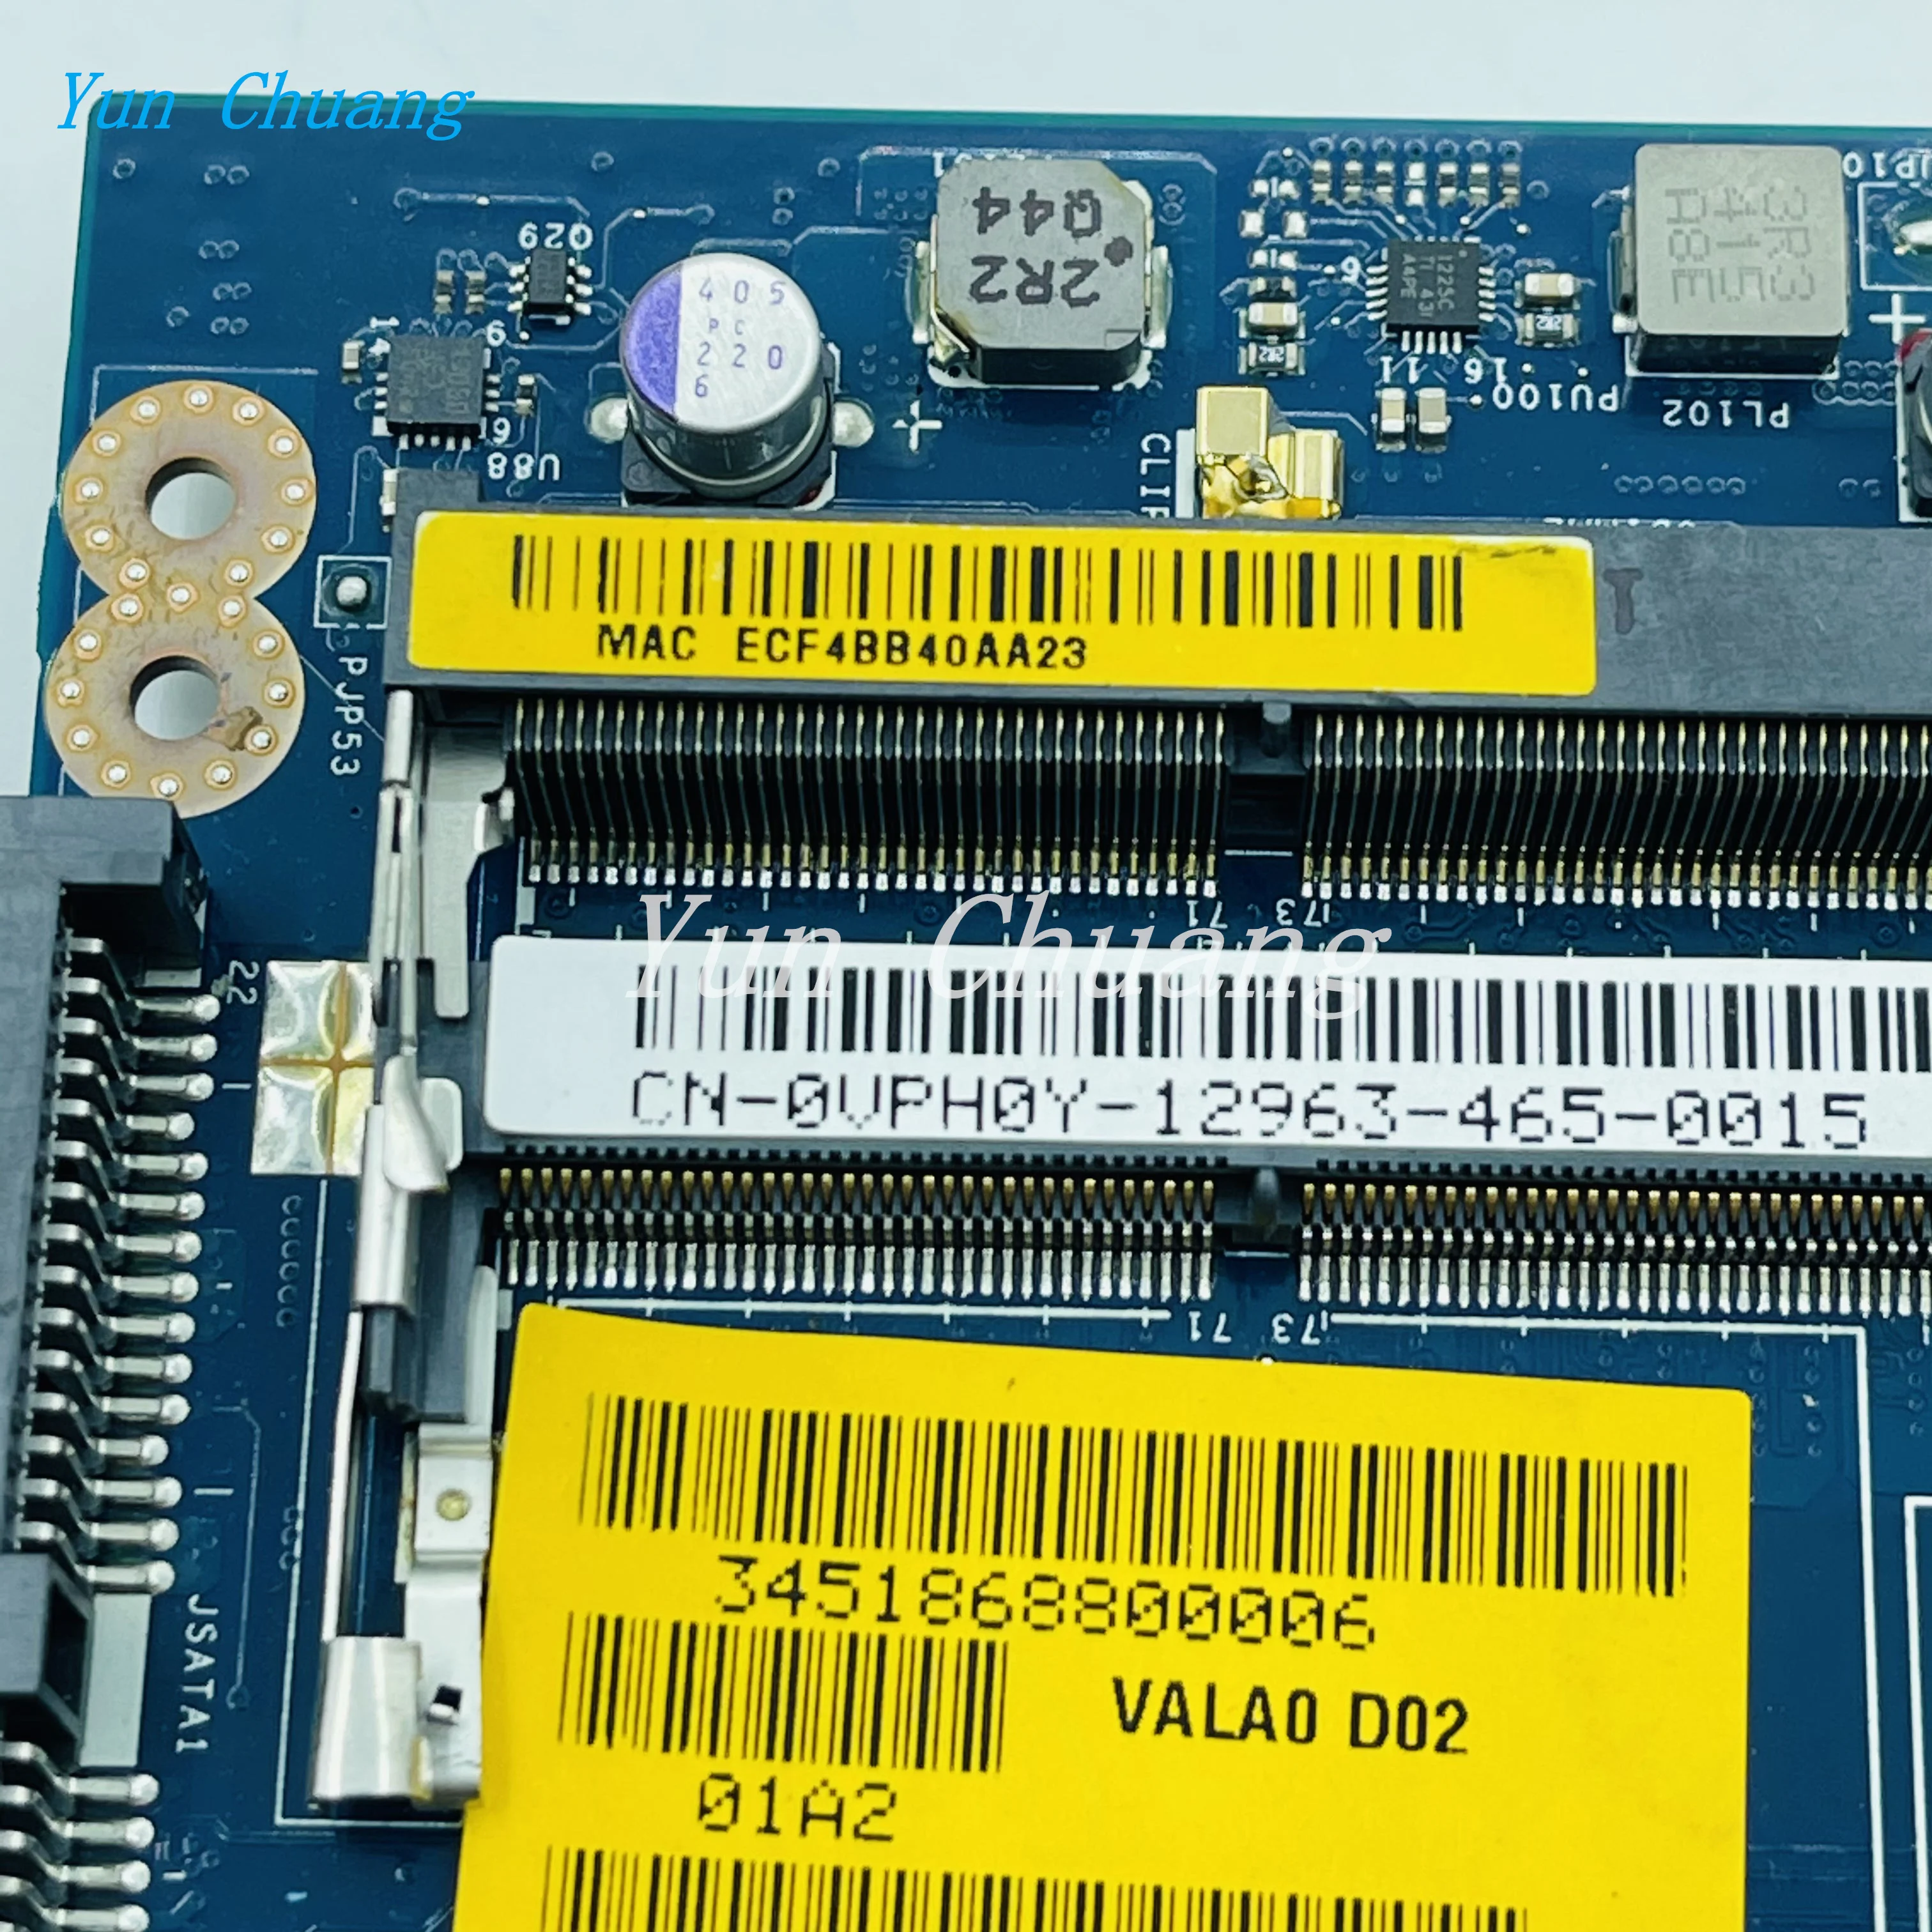 VALA0 LA-9413P JEDP CN-0VPH0Y 0VPH0Y дънна Платка ЗА ЛАПТОП DELL Latitude E6540 дънна Платка HD8790M 2 GB DDR3 100% Тествана